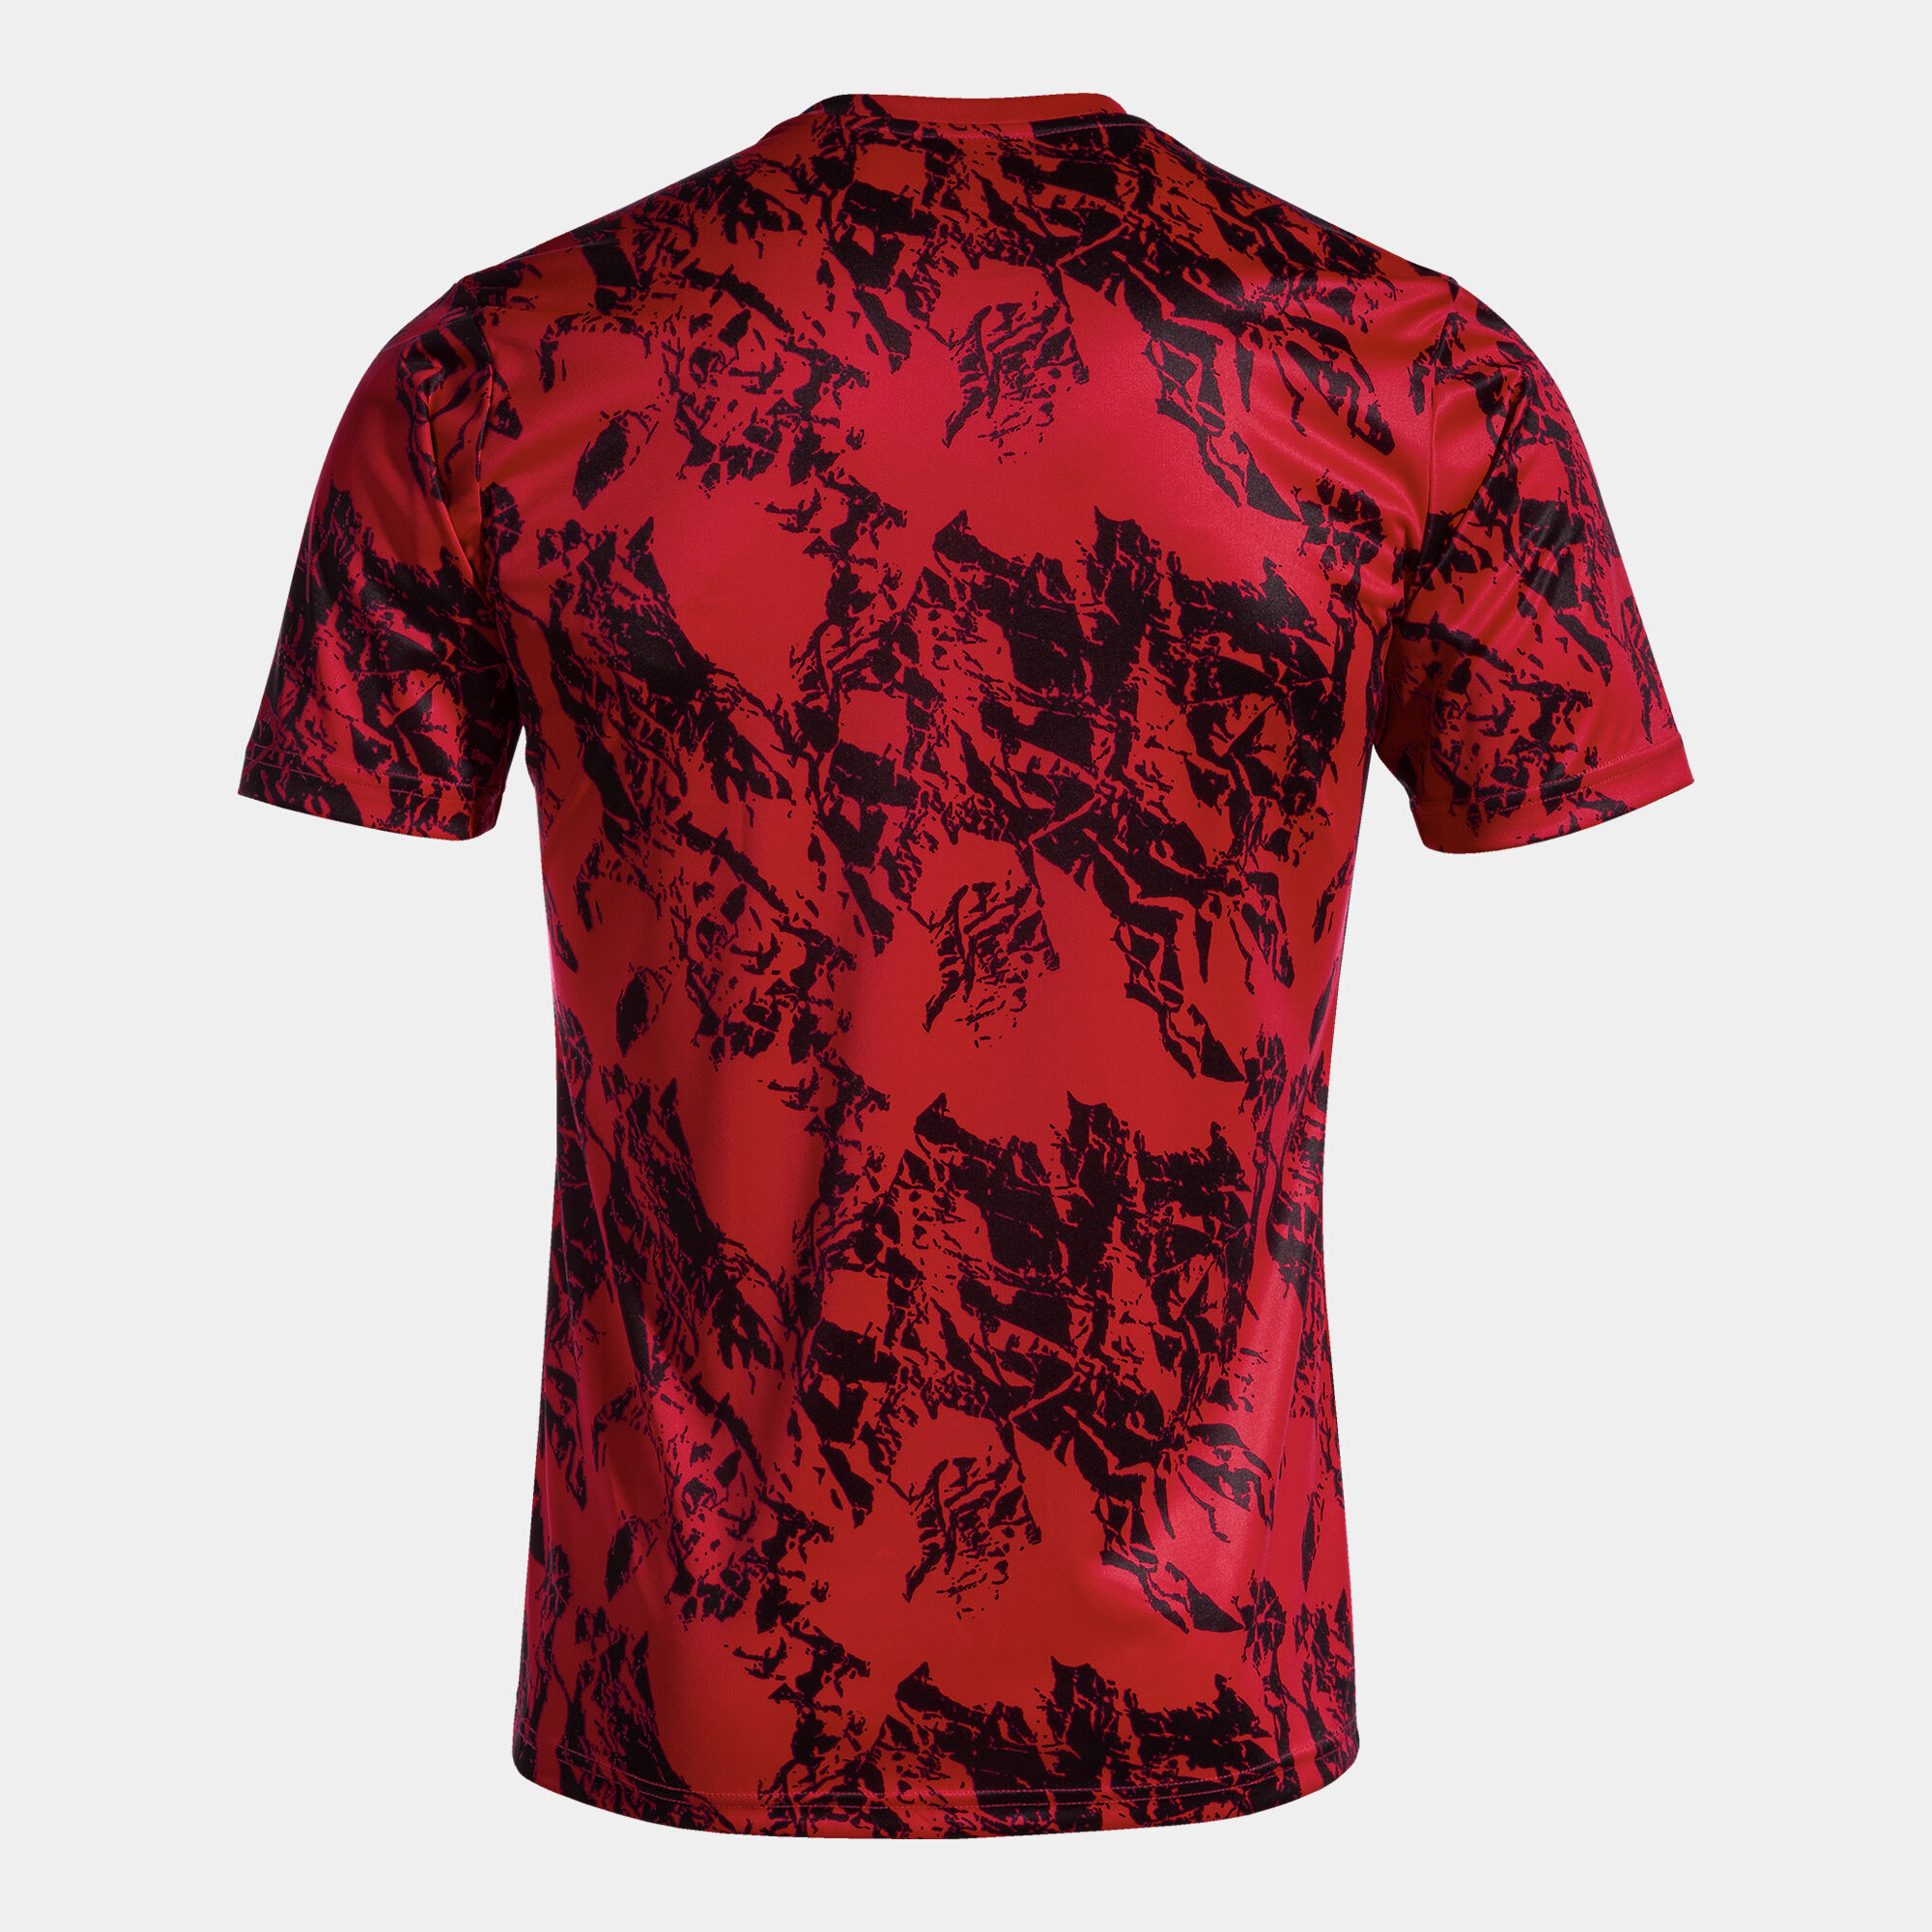 Camiseta manga corta hombre Lion rojo negro